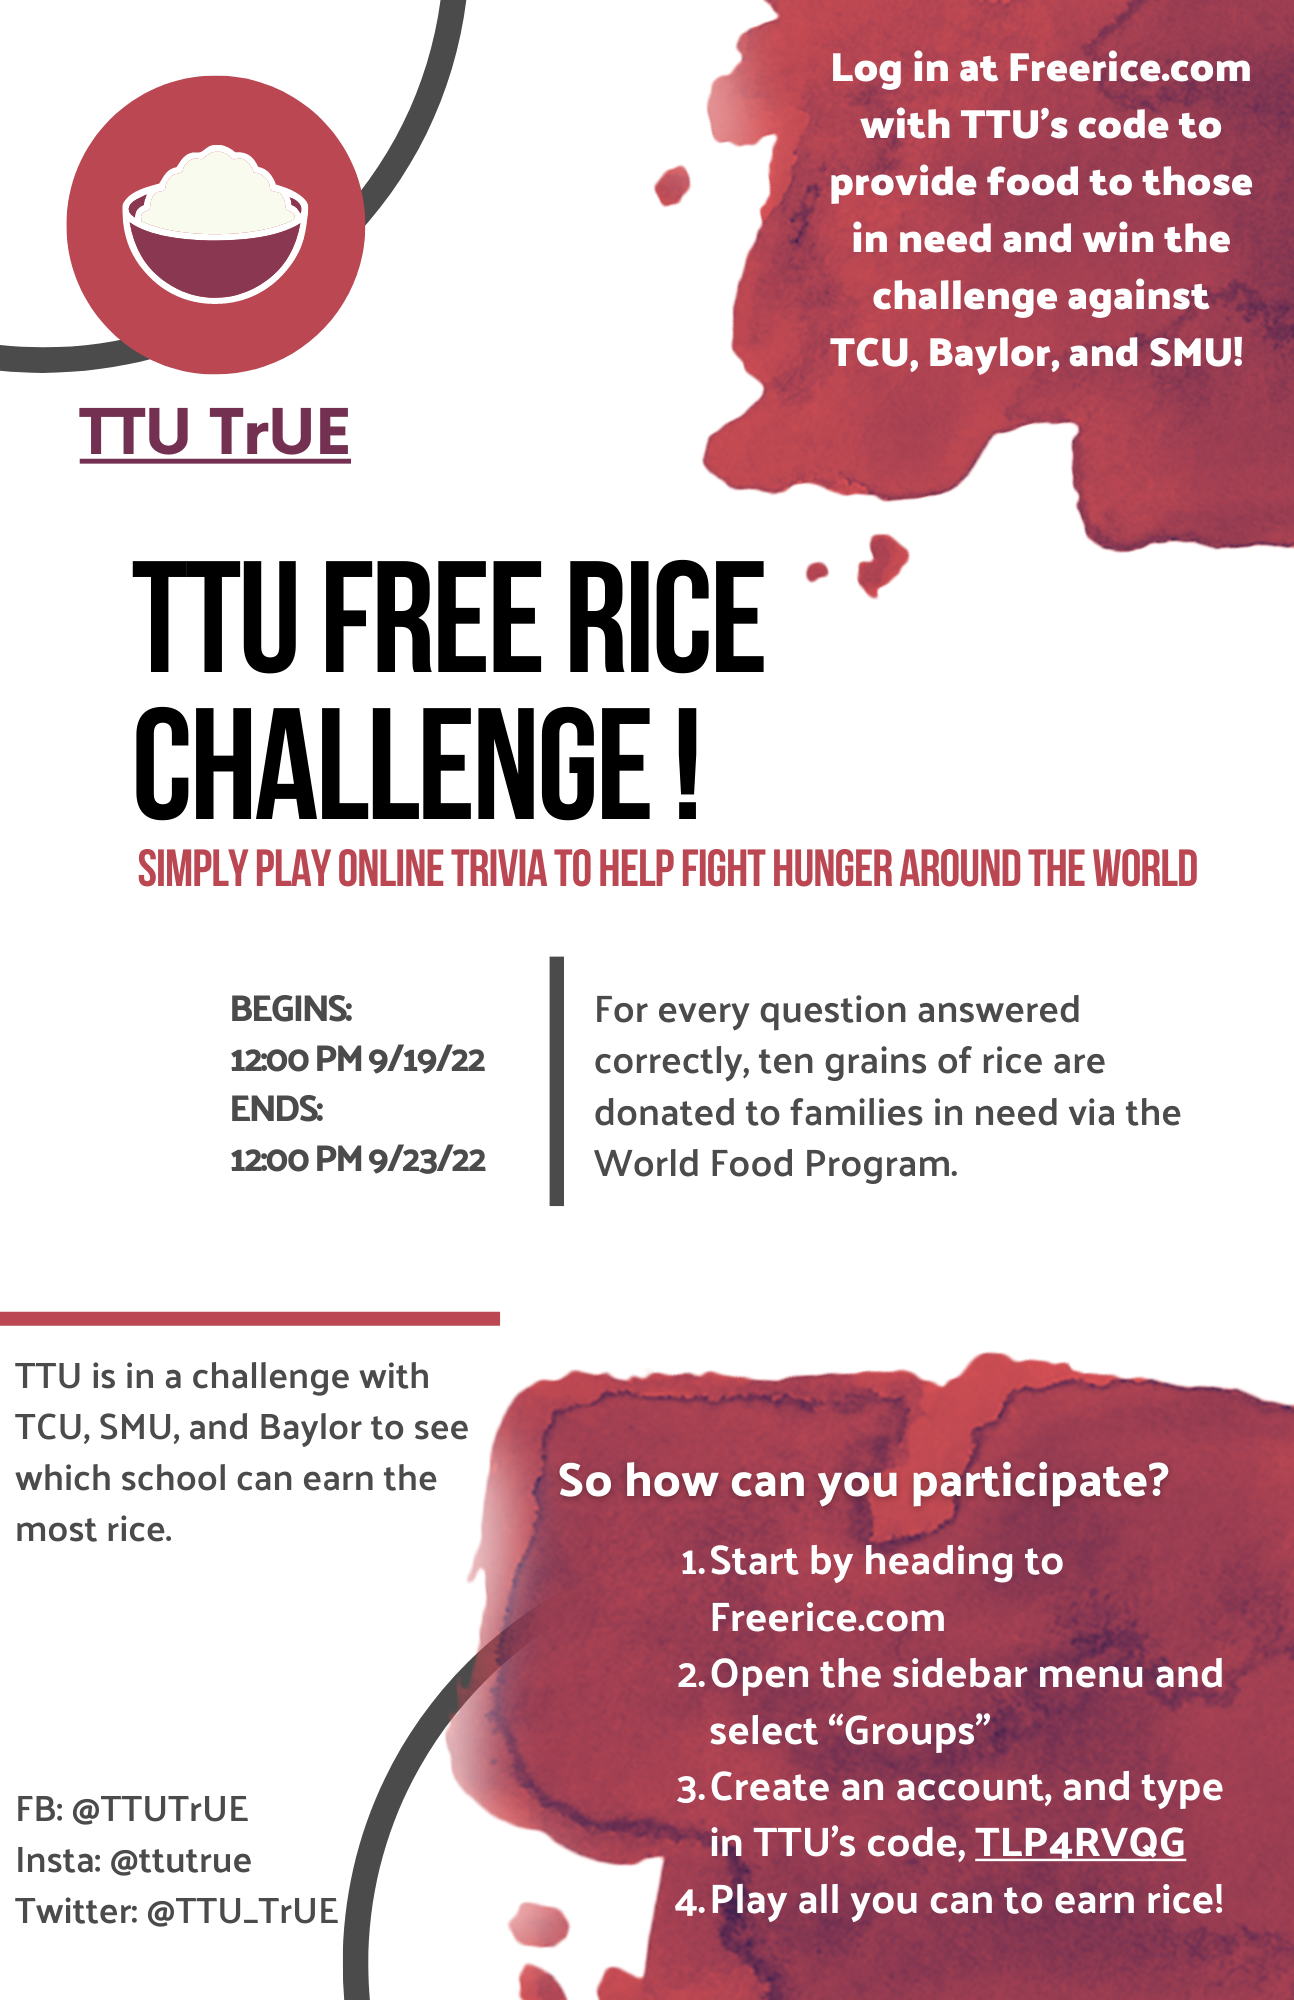 Free Rice Challenge information sheet